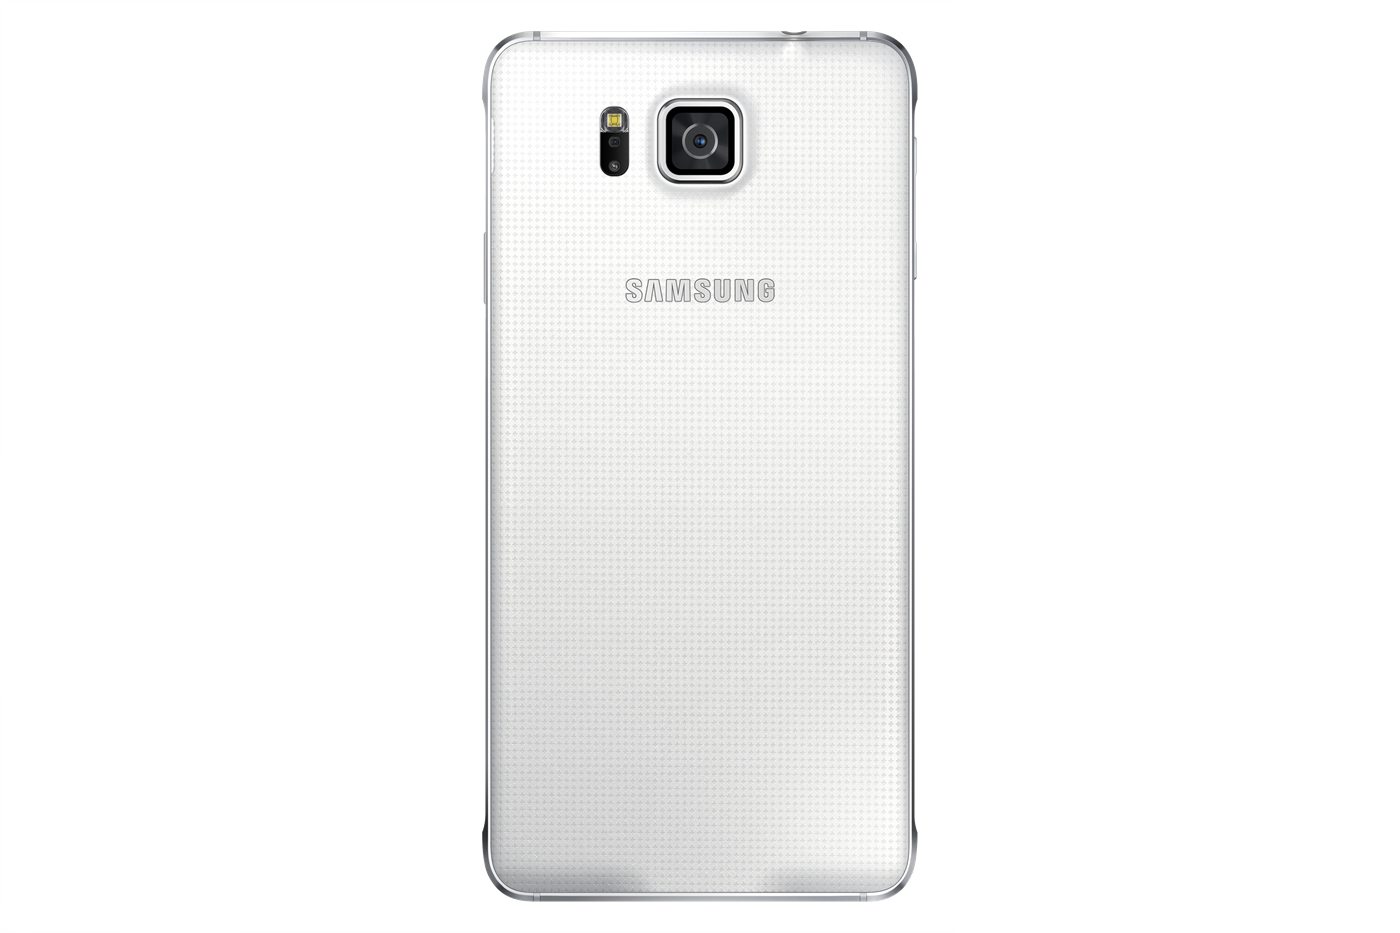 Samsung anuncia oficialmente o lançamento do Galaxy Alpha [vídeo]